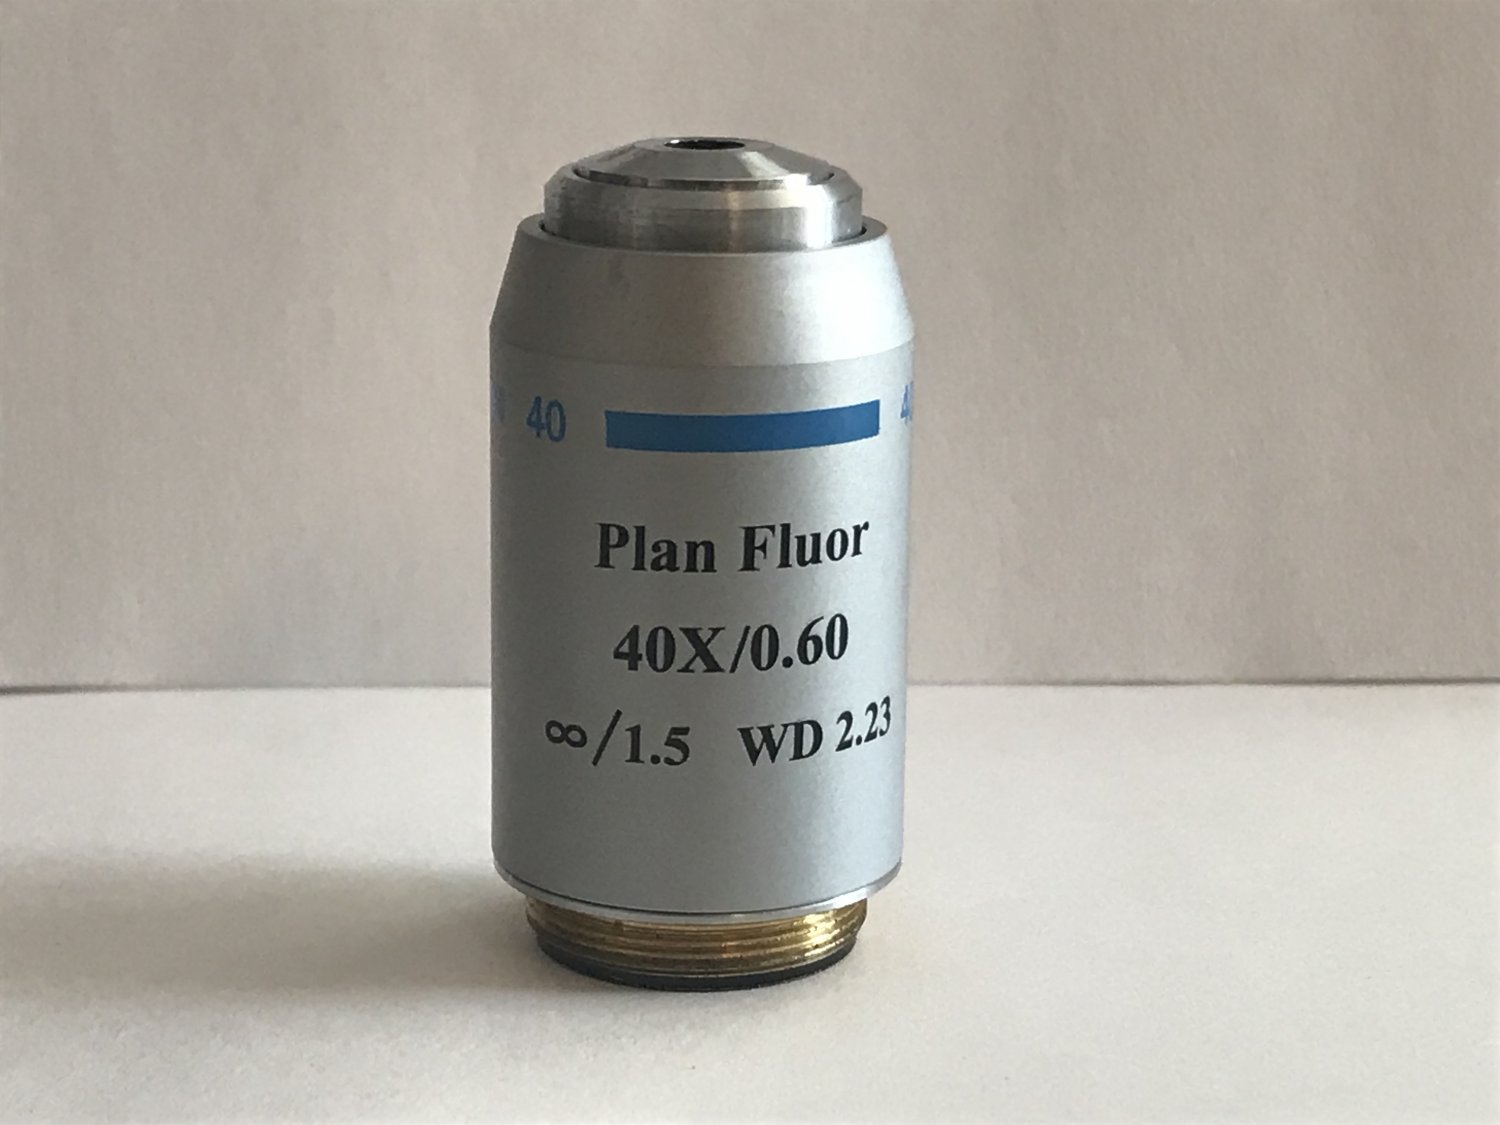 Plan Fluor 40X/0.60 - â��/1.5 WD 2.23 Microscope Objective